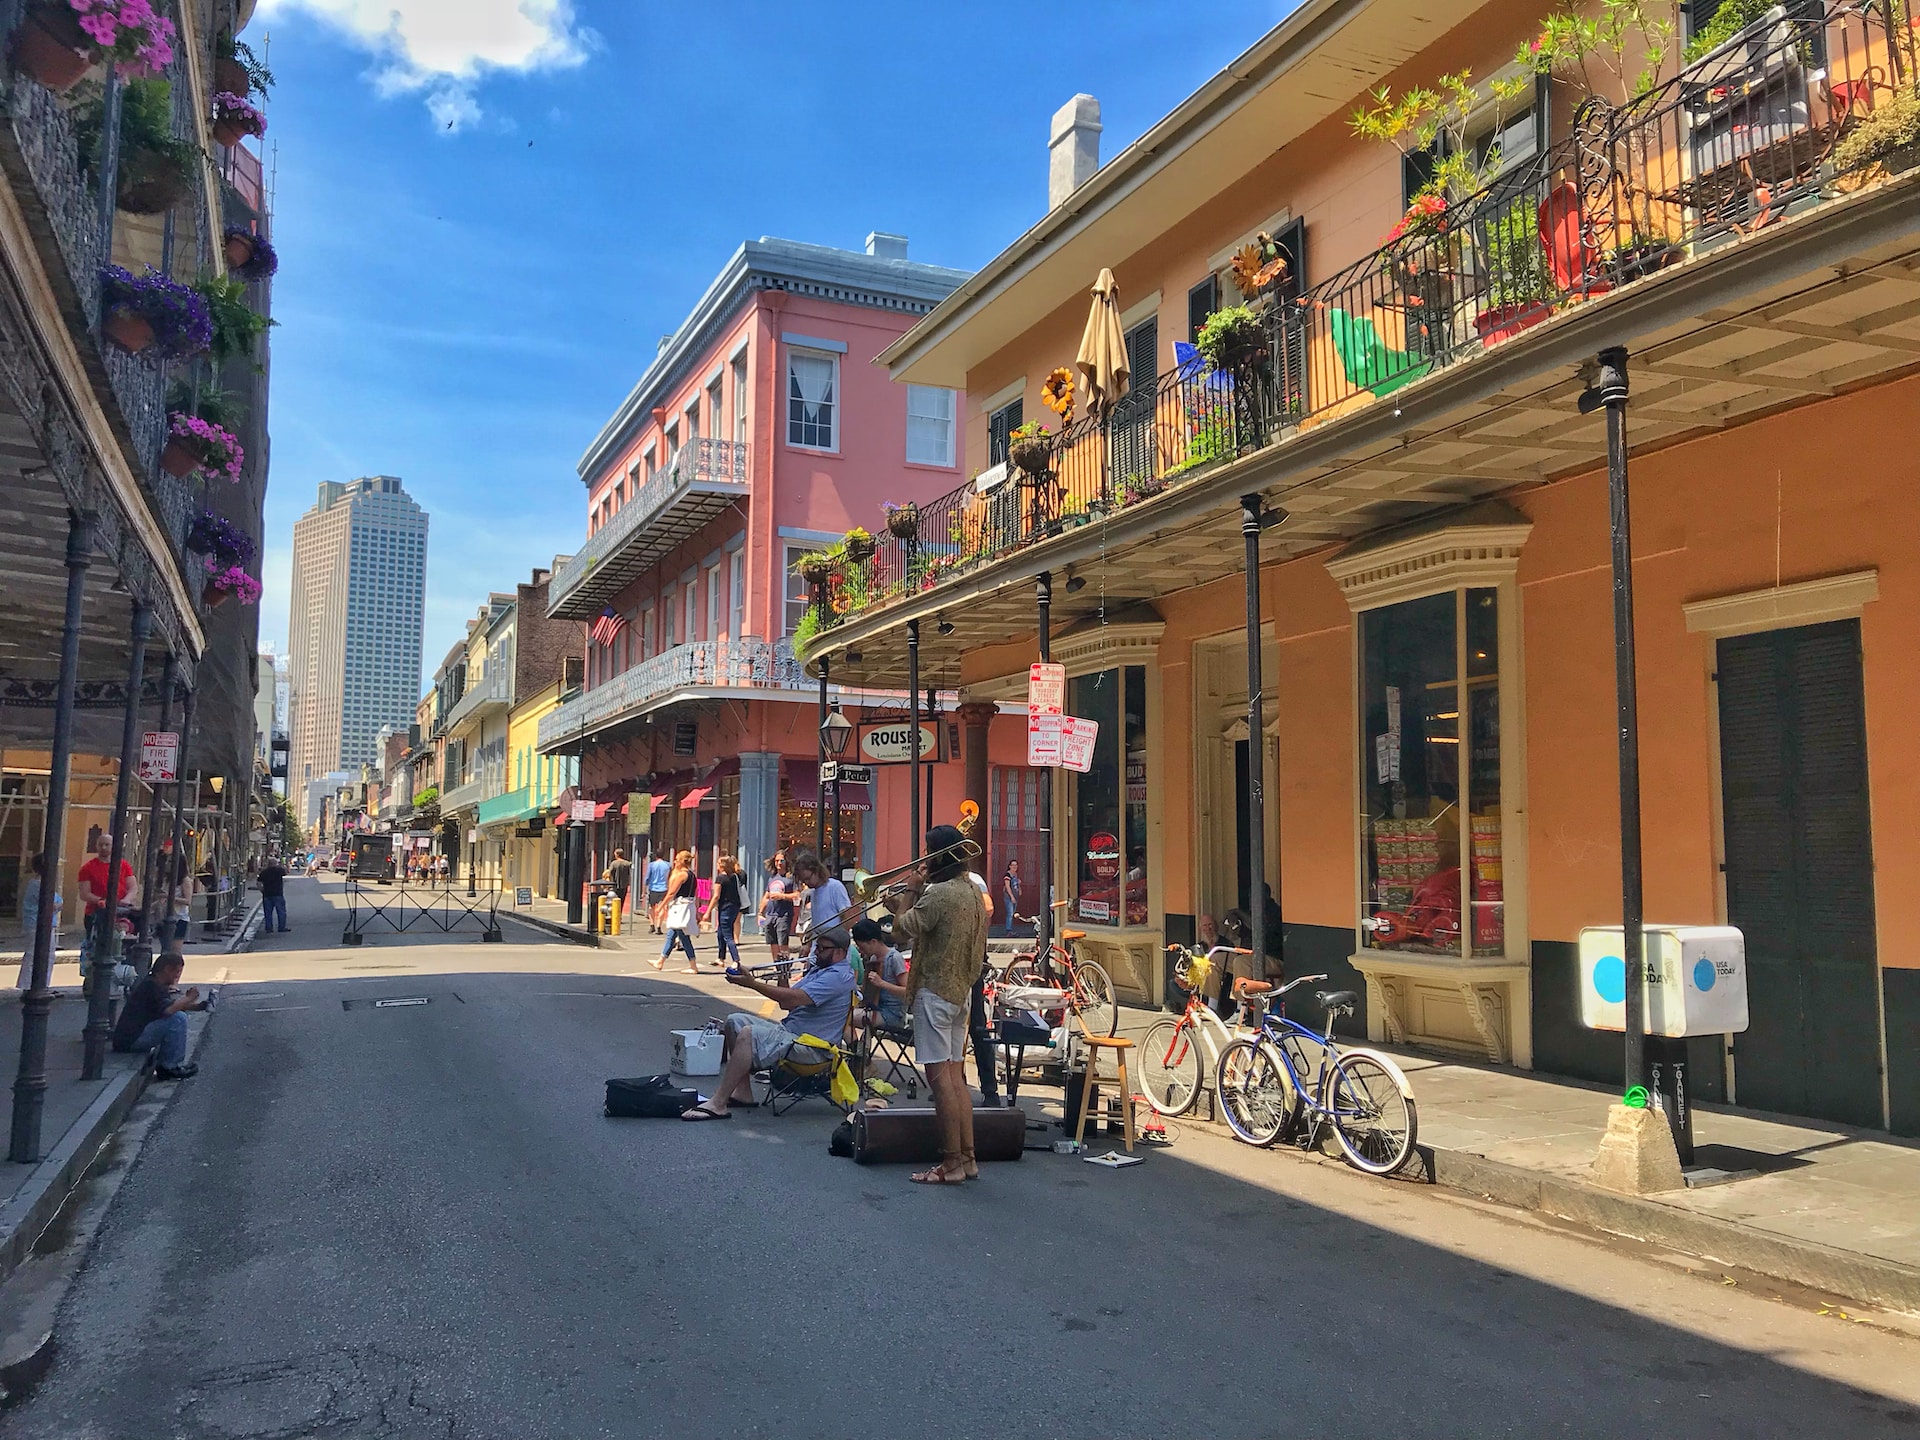 Street jazz in New Orleans.